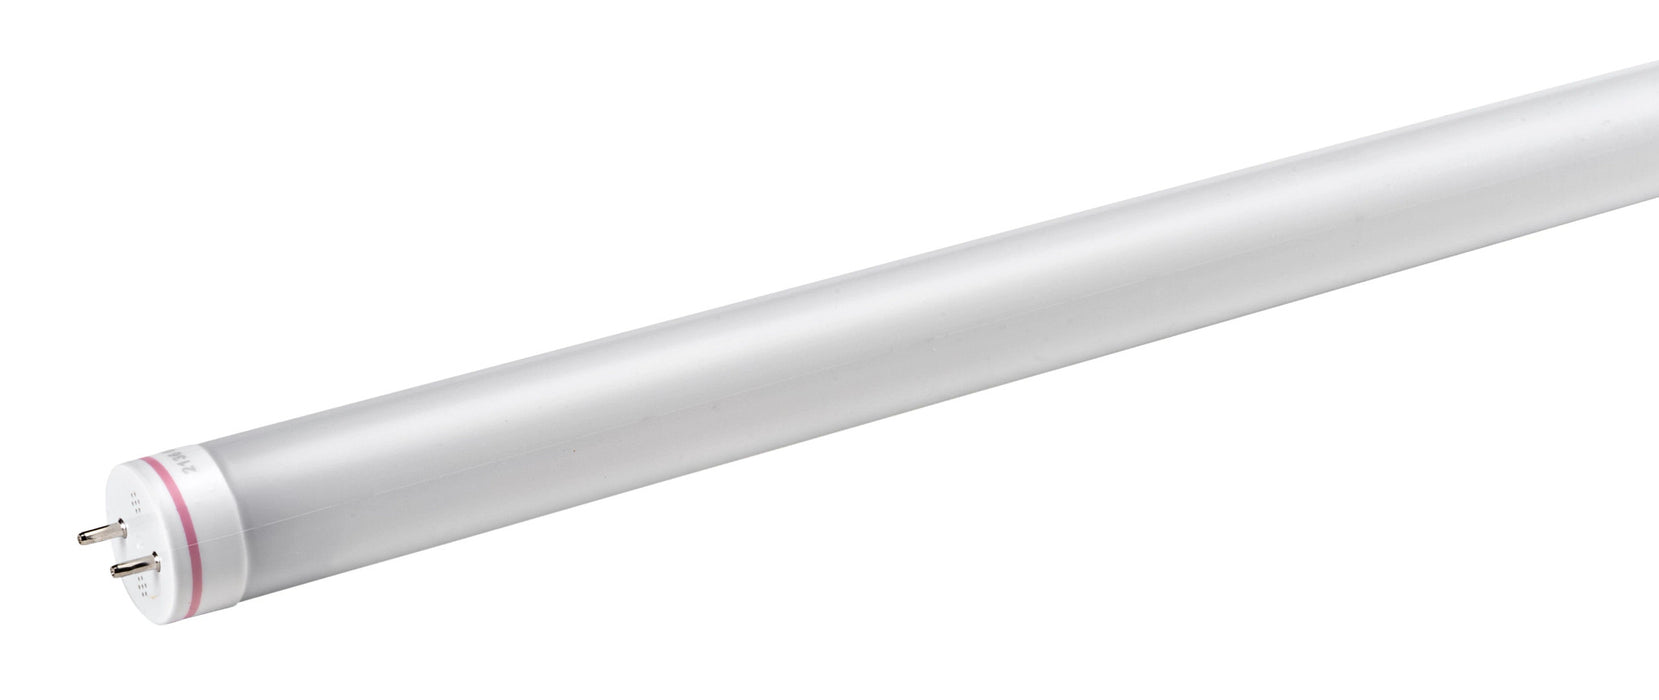 Keystone 9.5W LED T8 Tube Glass Ballast Compatible 4 Foot 3500K Smartdrive (KT-LED9.5T8-48G-835-S /G3)